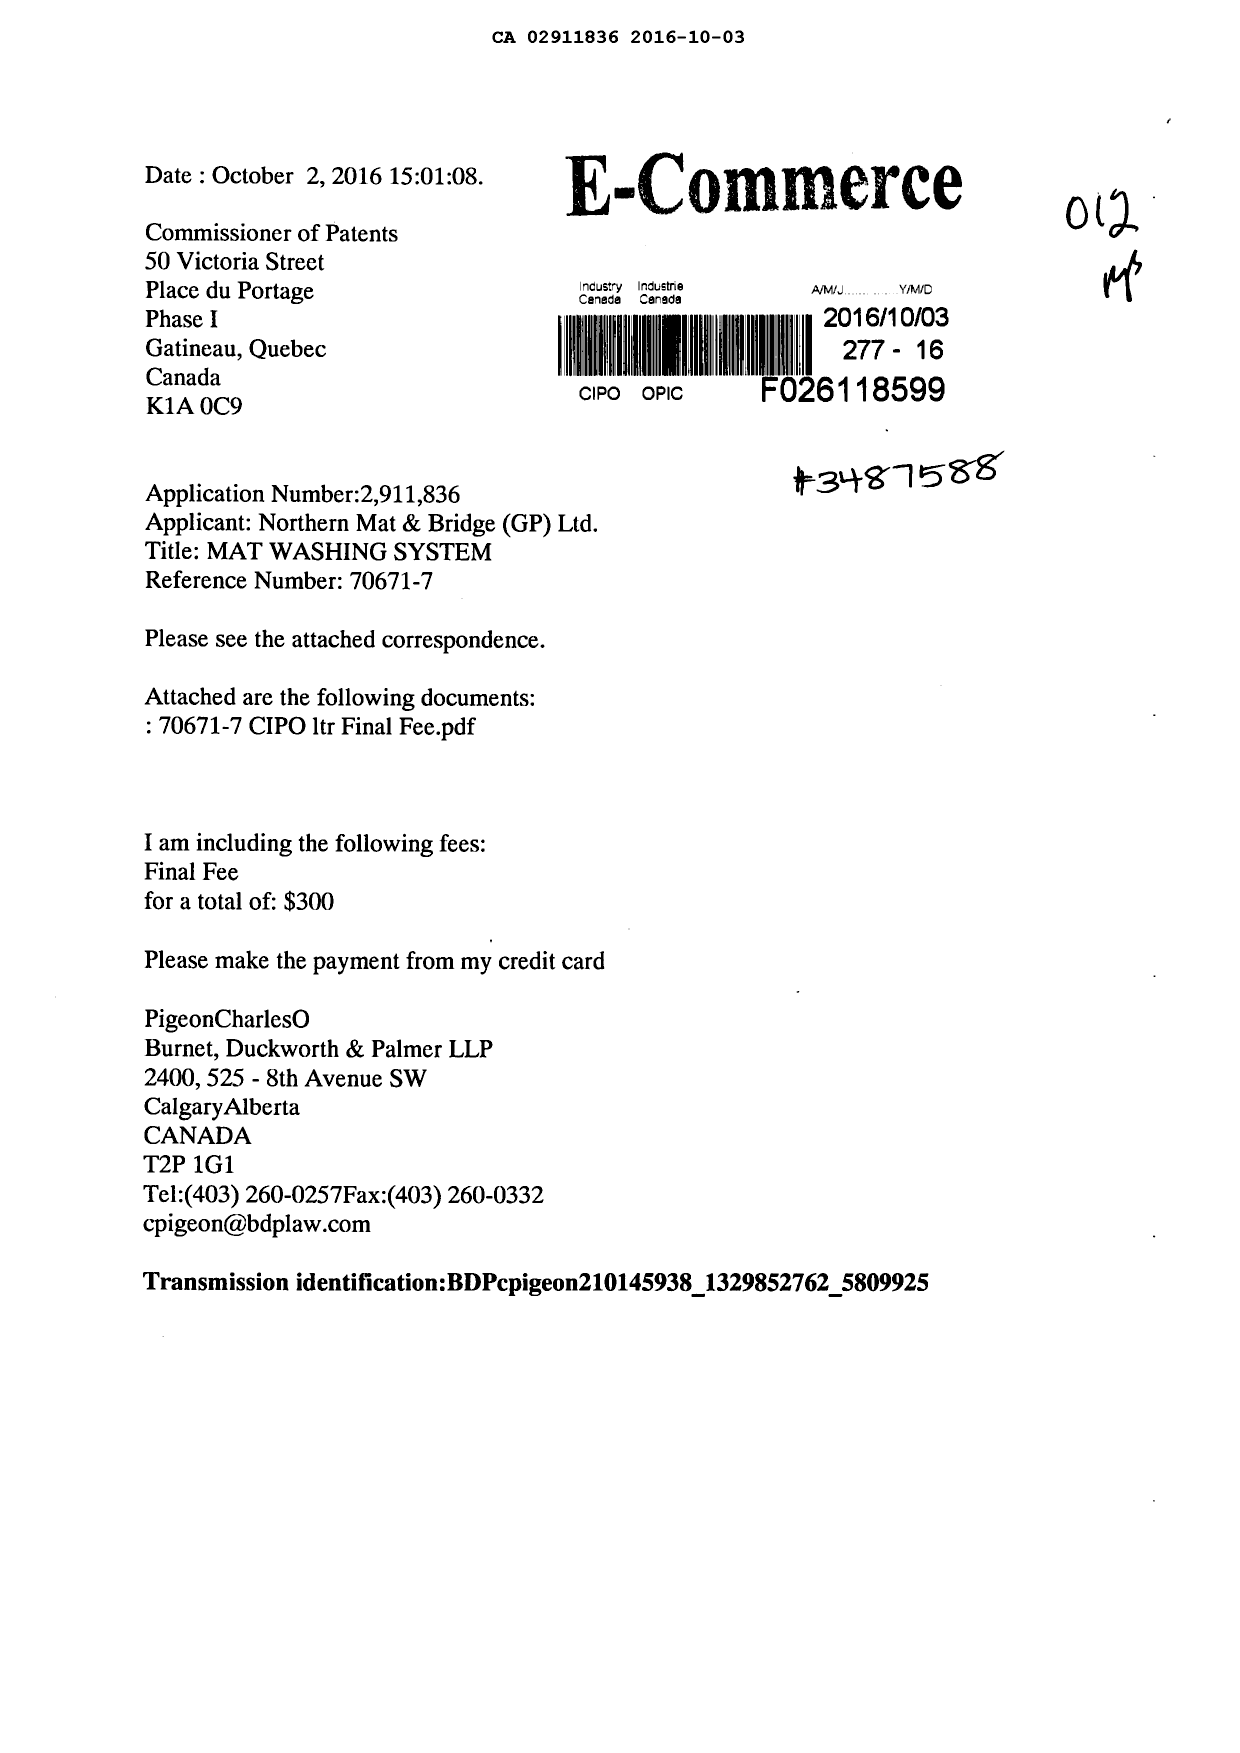 Canadian Patent Document 2911836. Correspondence 20151203. Image 1 of 2